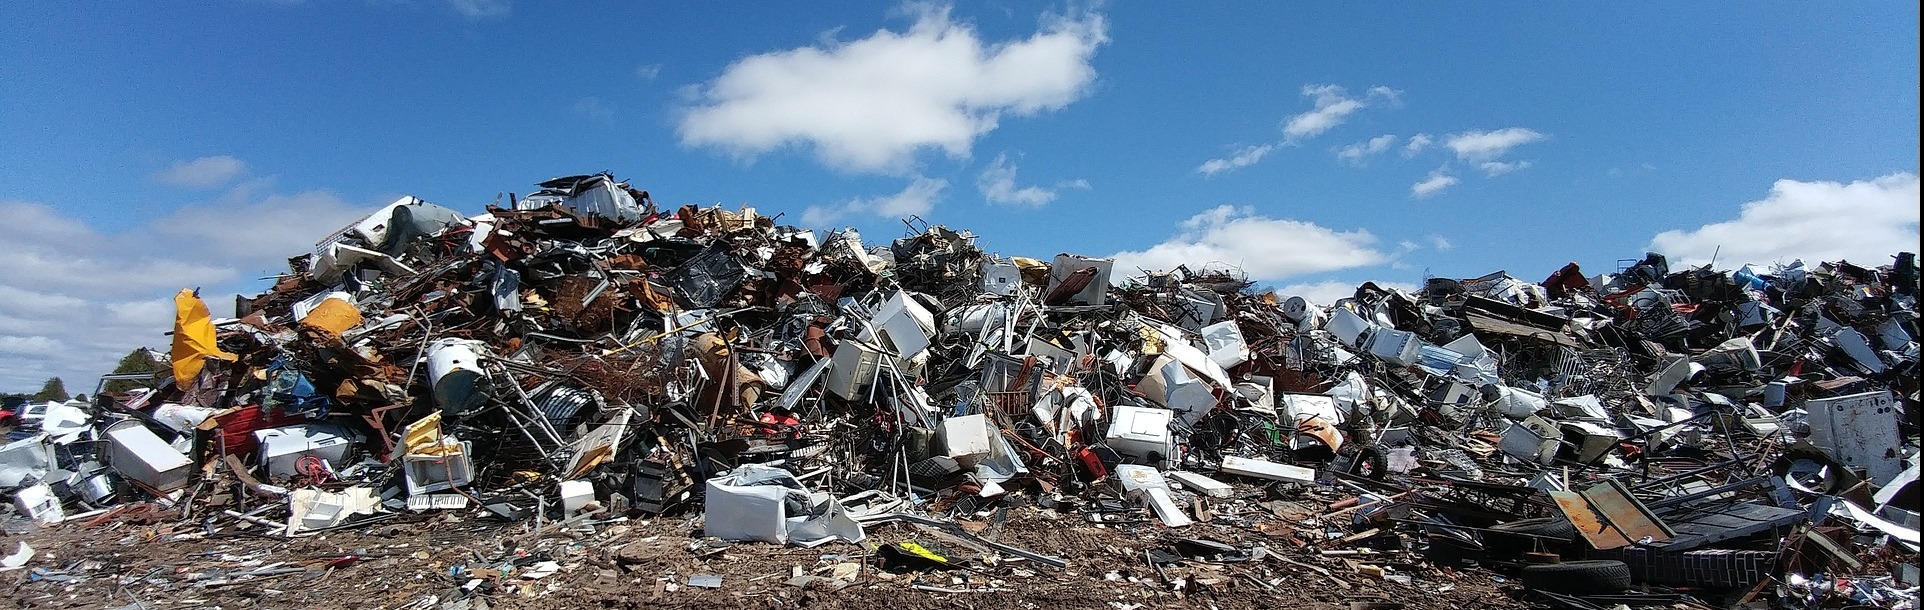 Landfill Garbage Pile Sustainability Cropped Landscape